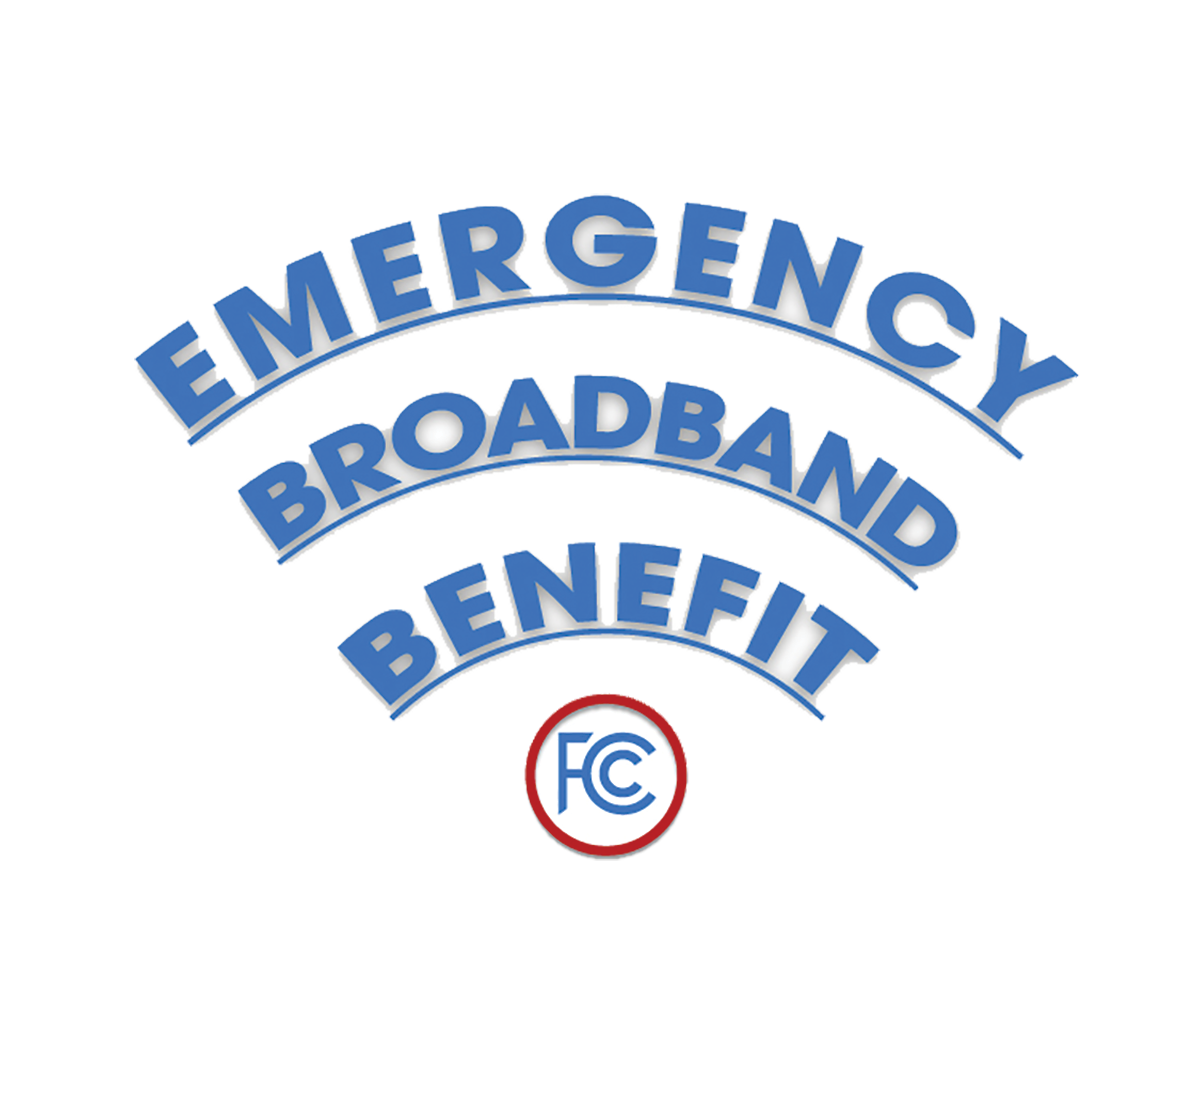 Emergency Broadband Benefit